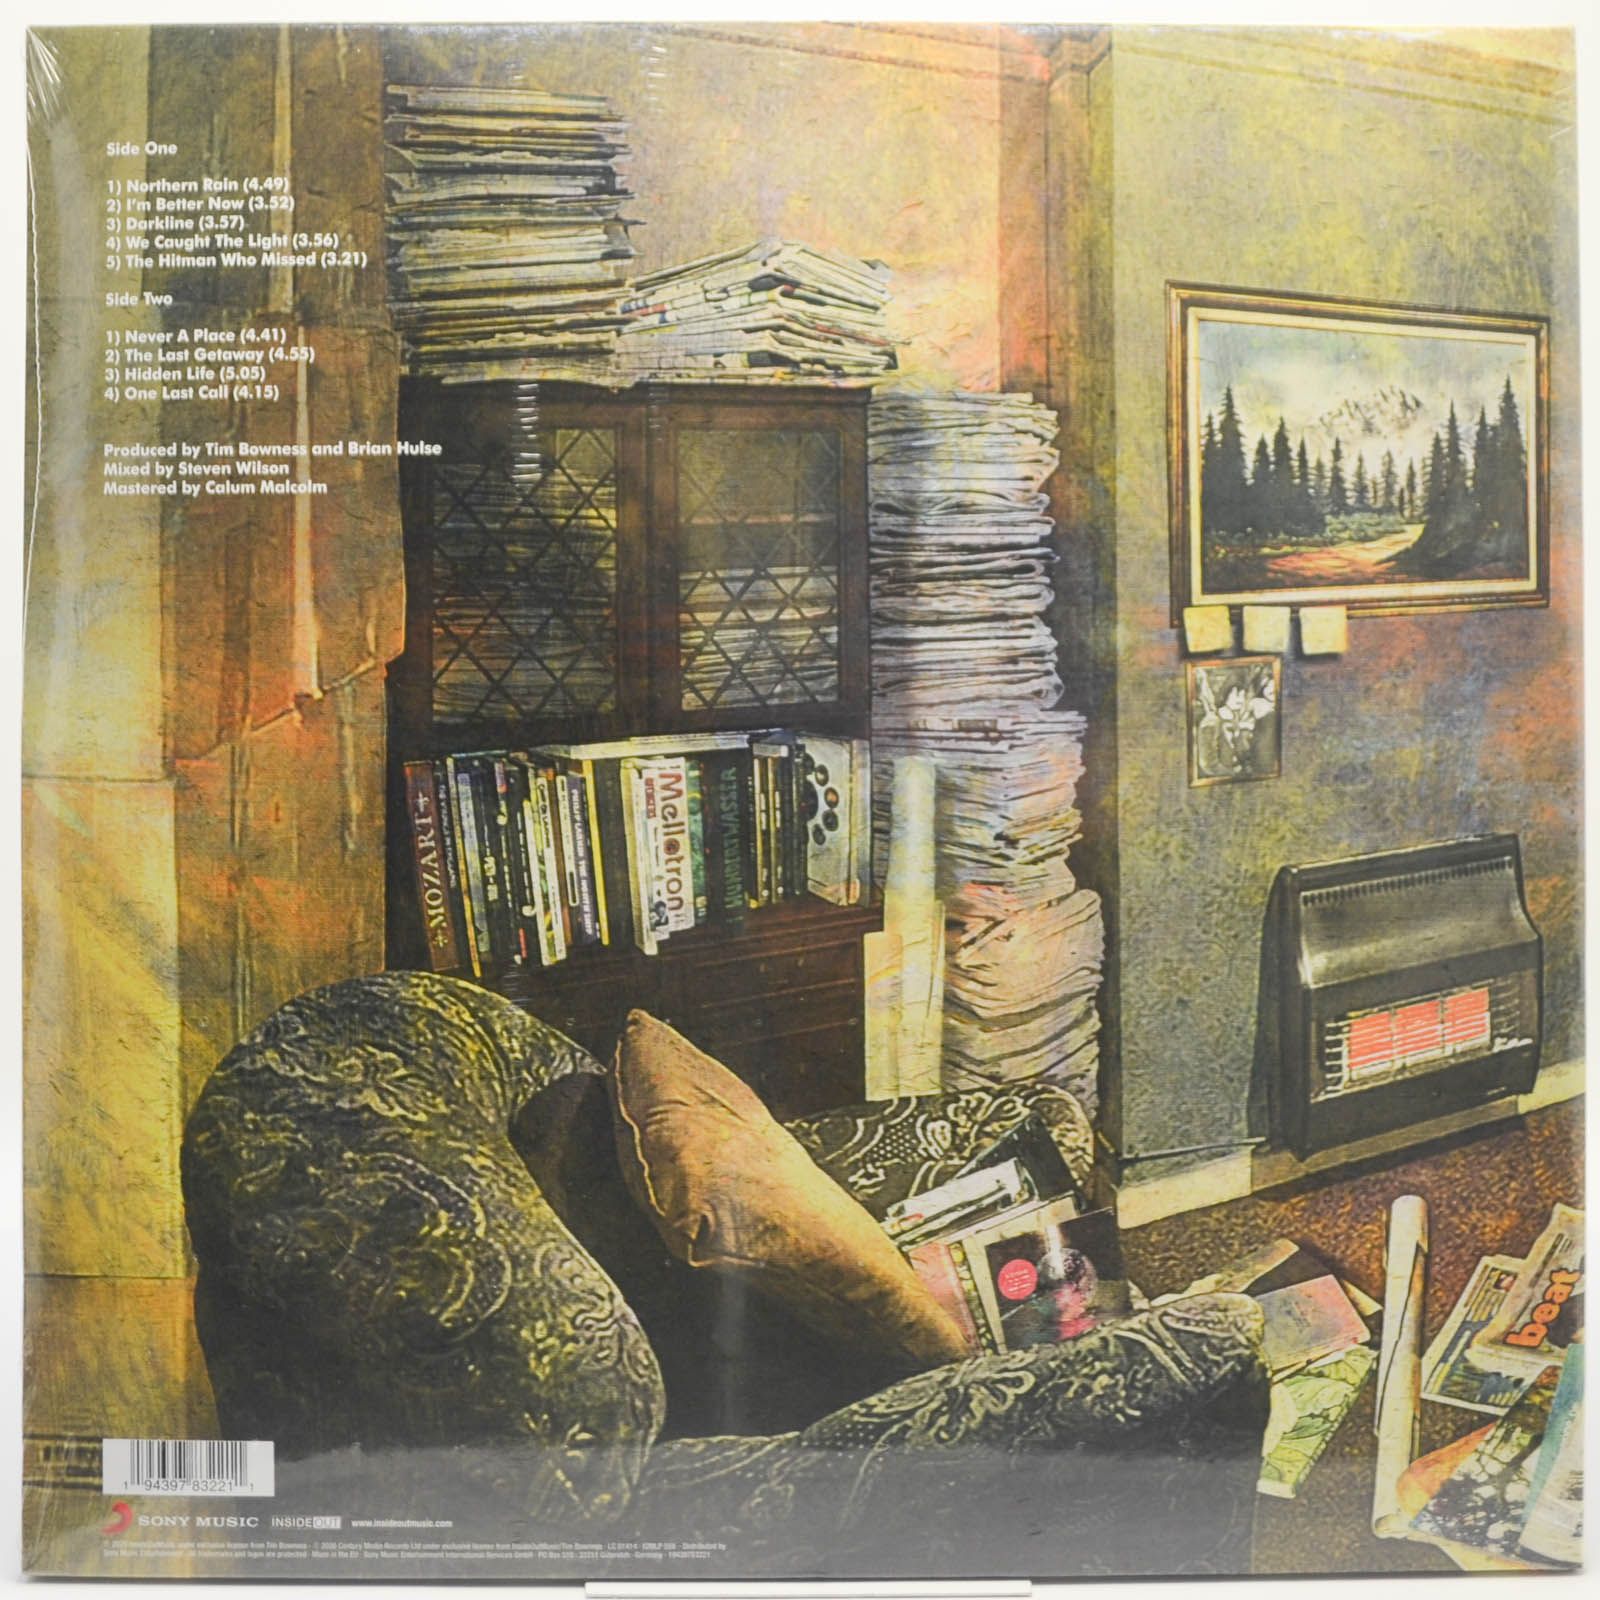 Tim Bowness — Late Night Laments (LP+CD), 2020